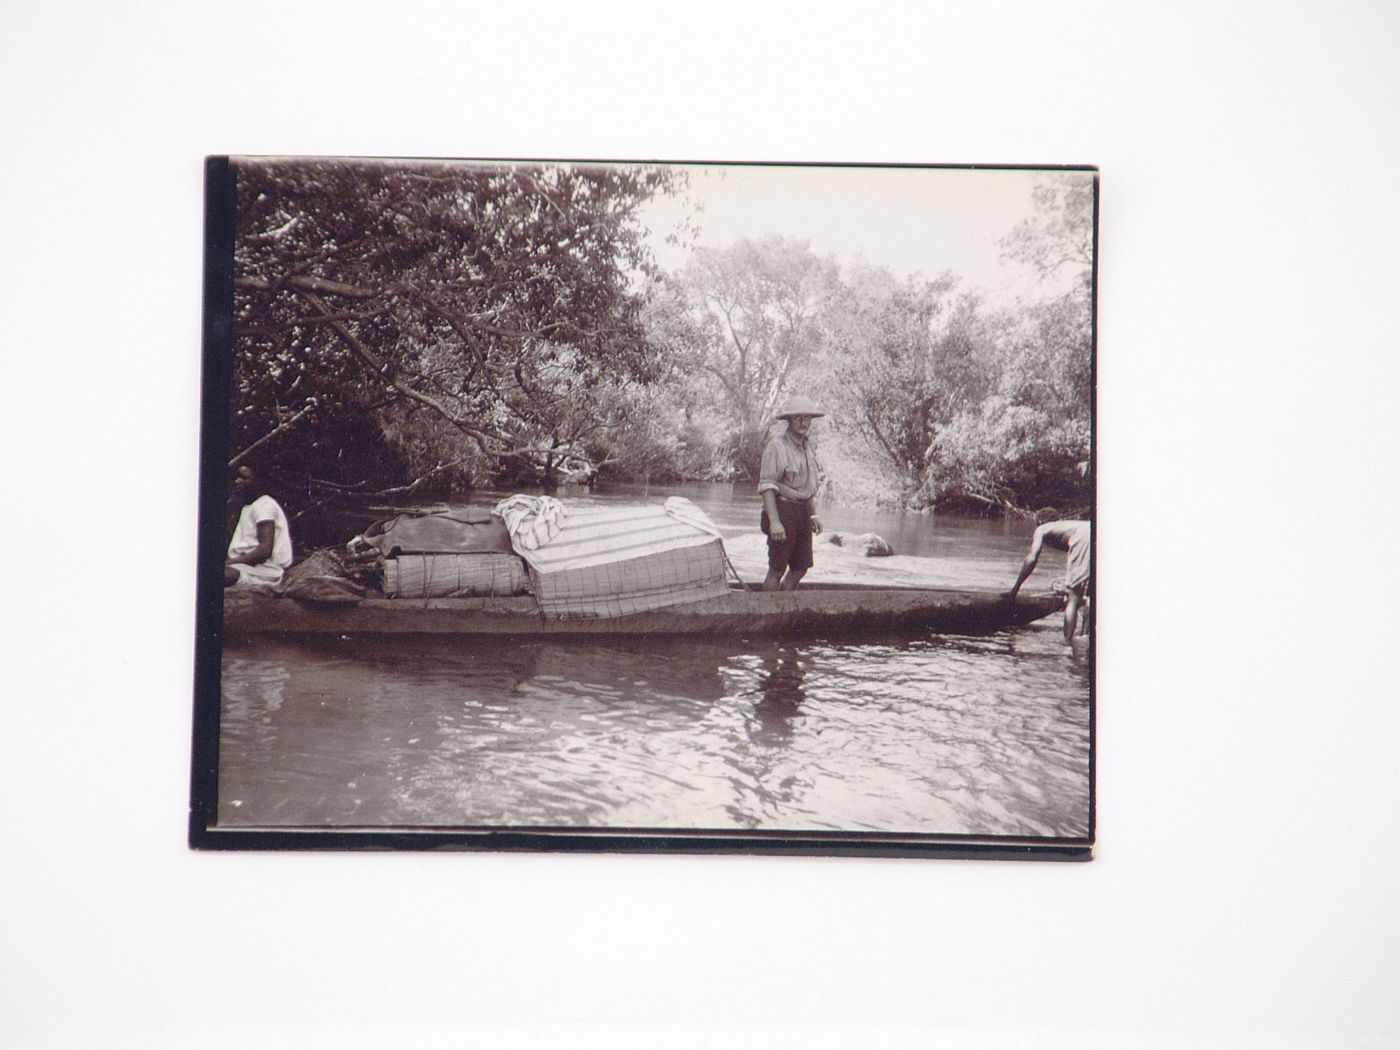 View of European man in a mokoro (wooden dugout canoe) boat, Zambezi River